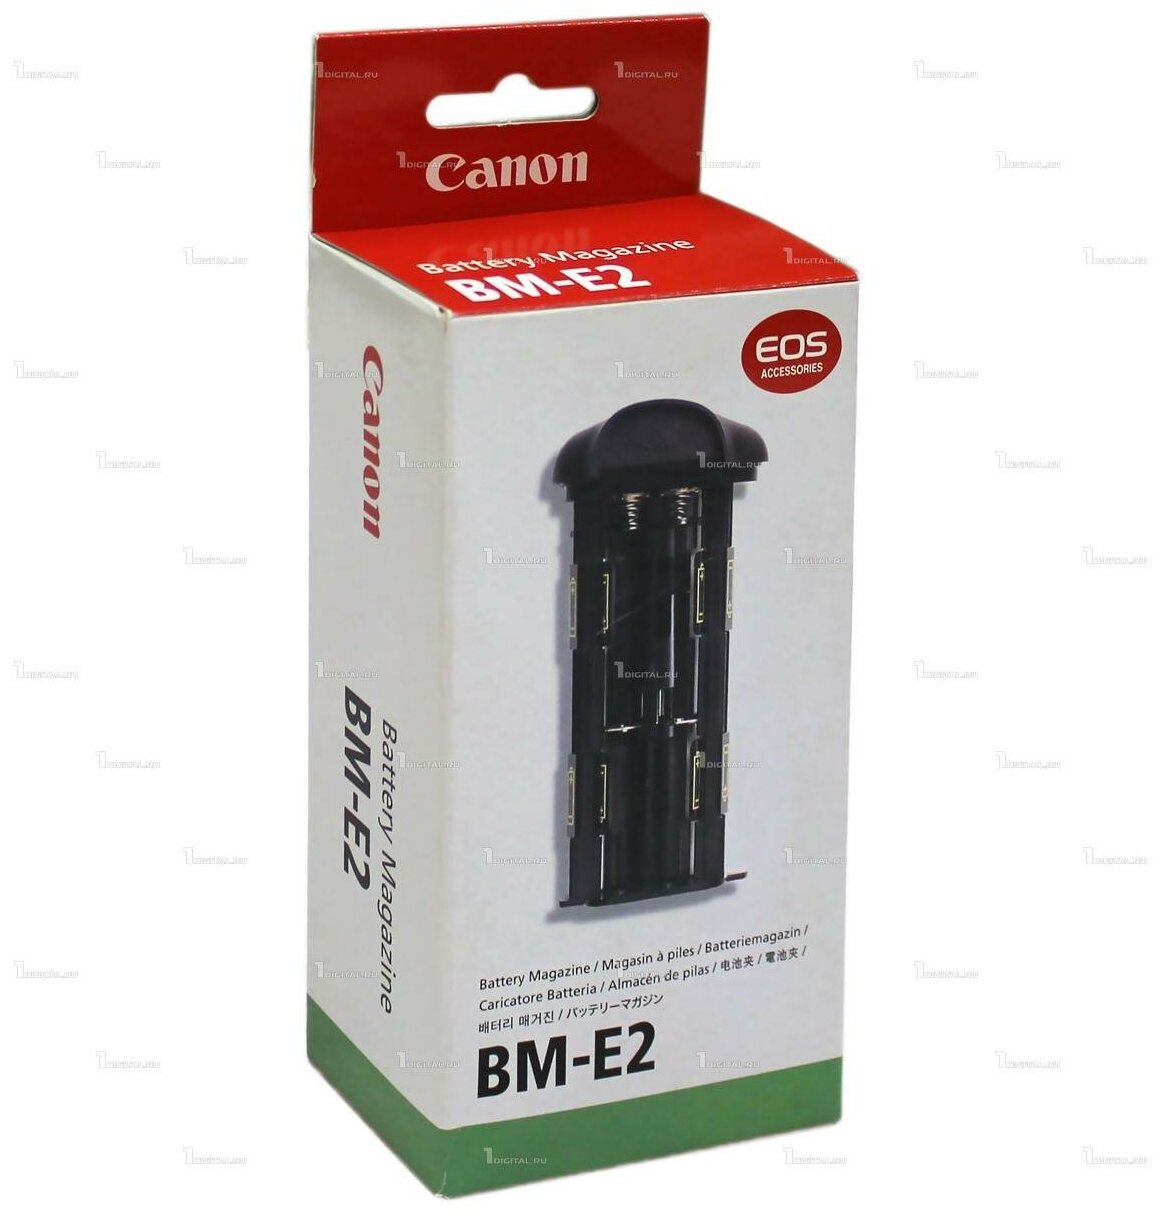 Батарейный магазин Canon BM-E2 для рукоятки PB-E2 для 8-ми батареек типа AA вместо 2-х BP511/ (2446A001)